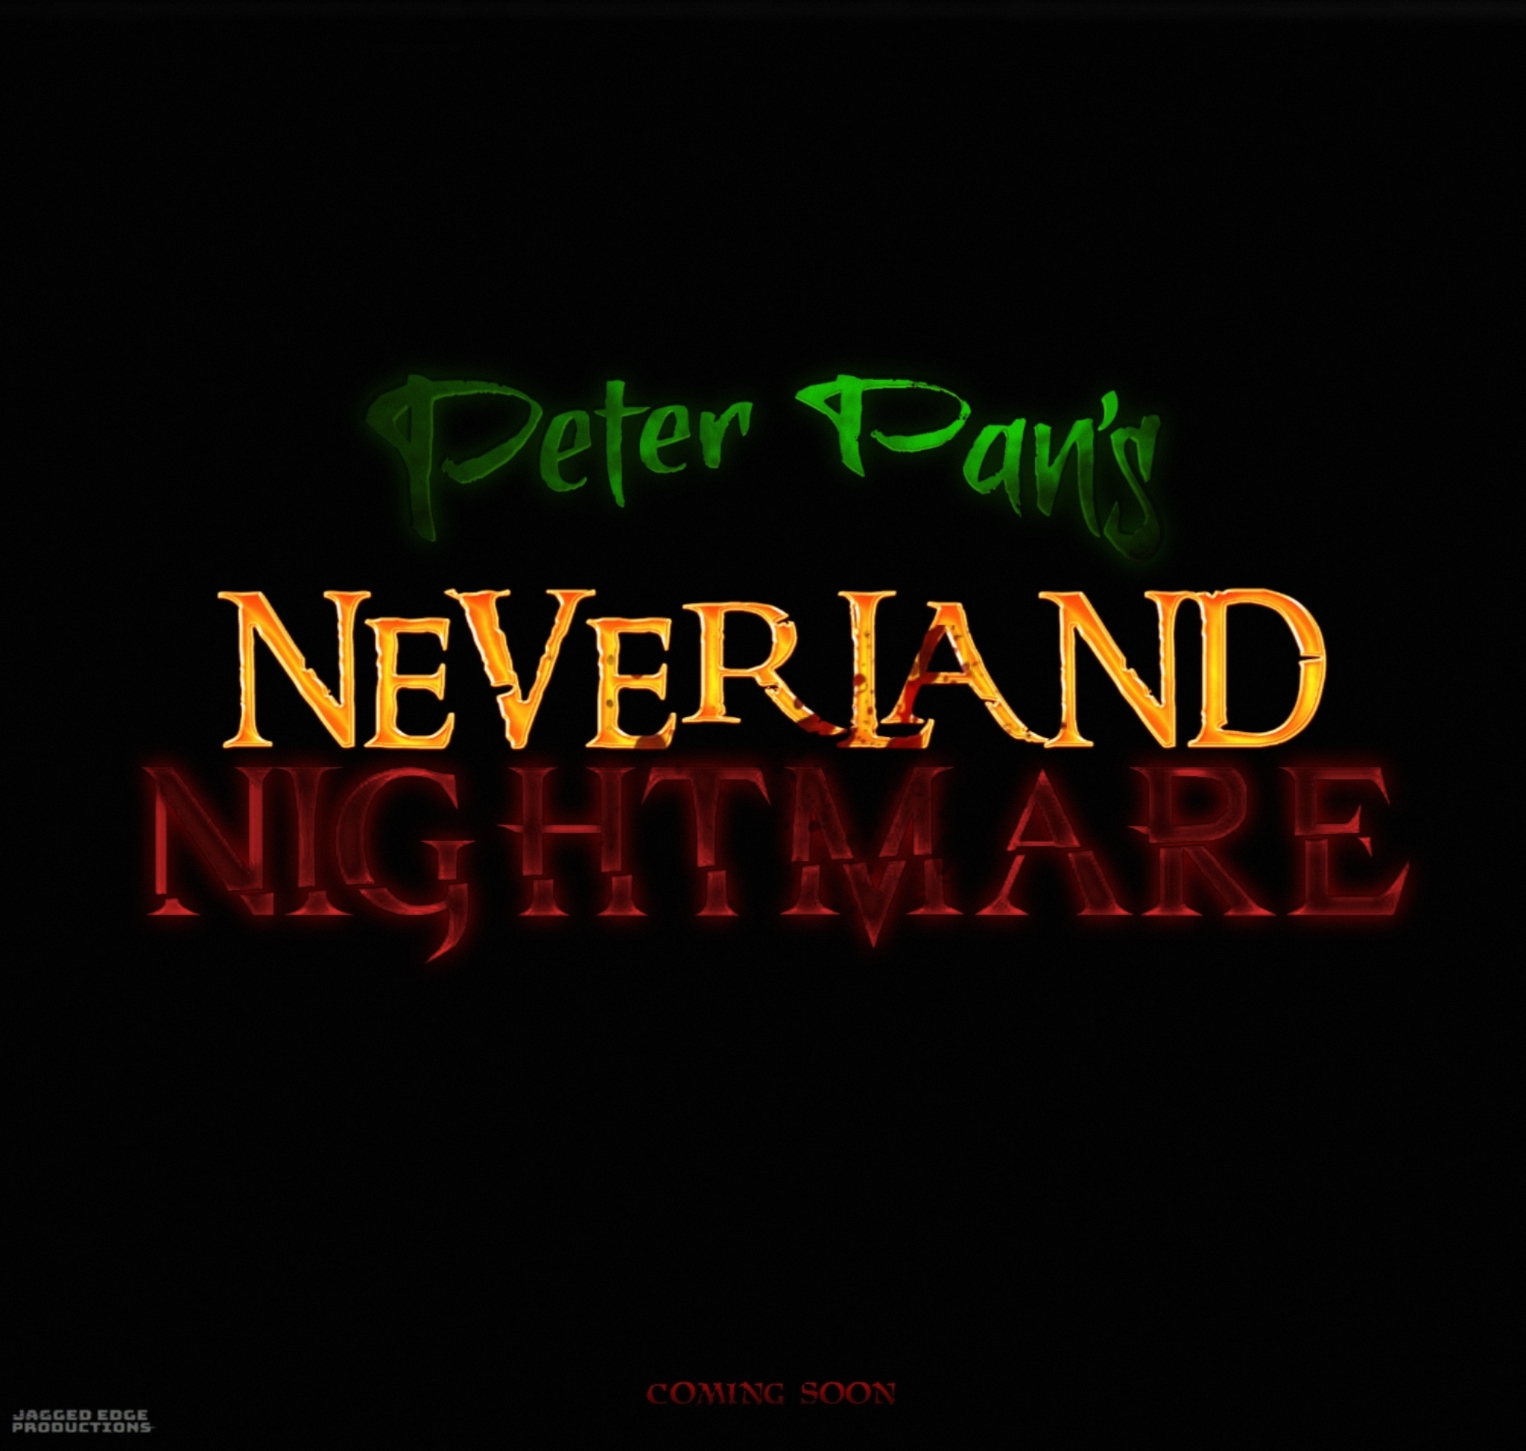 Immagine dal film Peter Pan's Neverland Nightmare